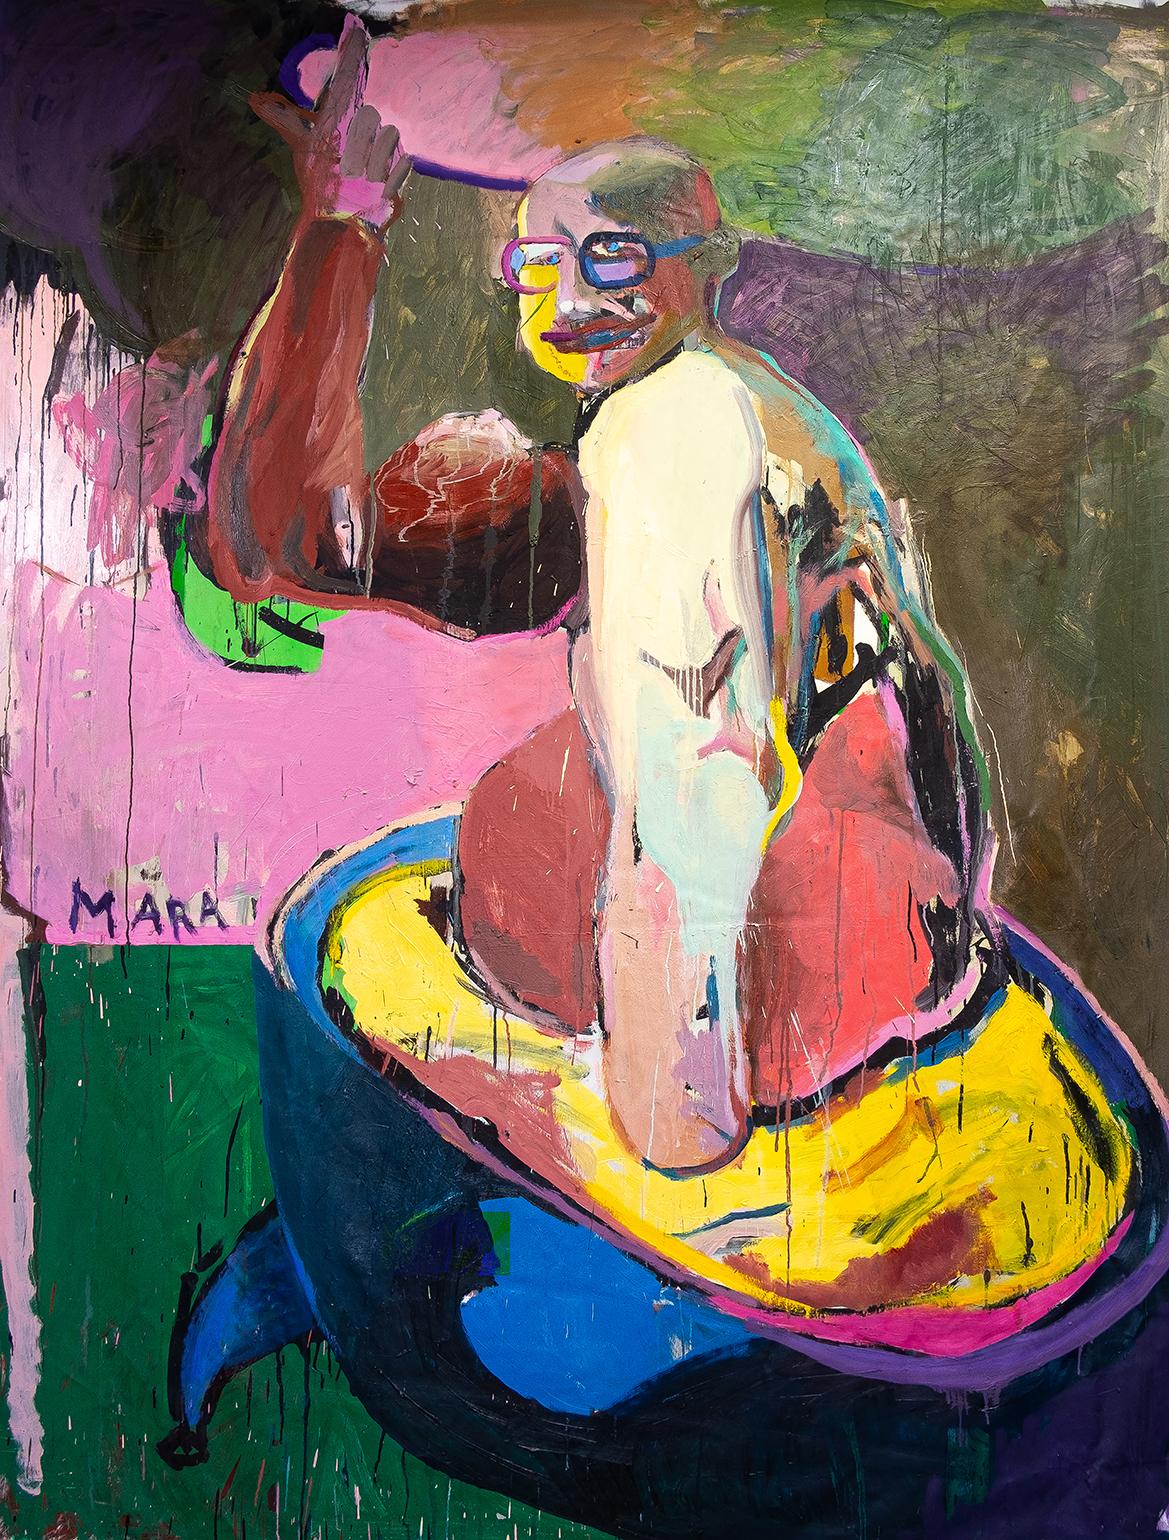 Rafal Chojnowski Portrait Painting - Marat  - Large Format Painting - Contemporary Expressionism Painting